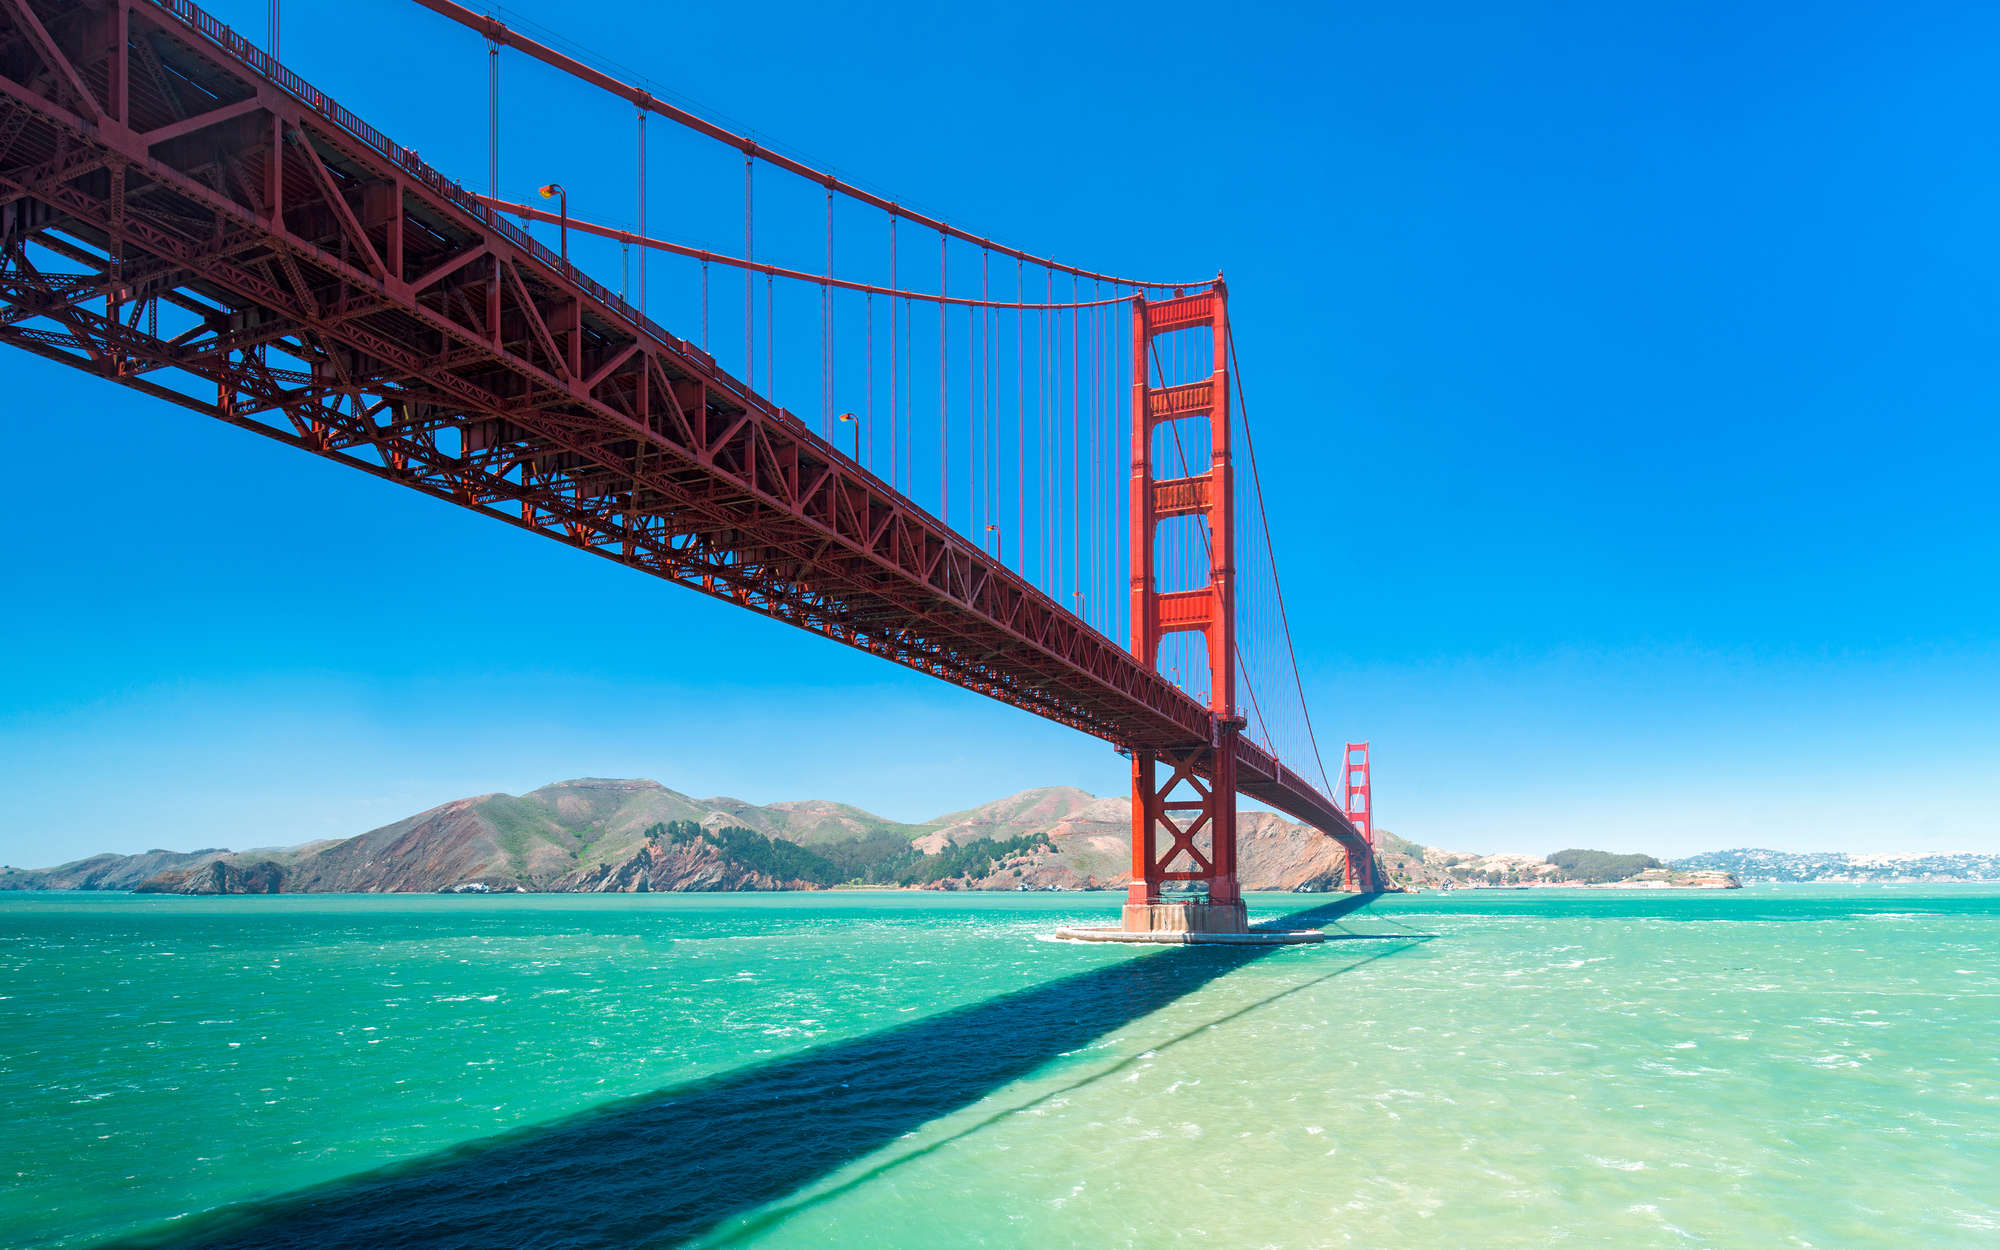             Golden Gate Bridge in San Francisco mural - pearlescent smooth fleece
        